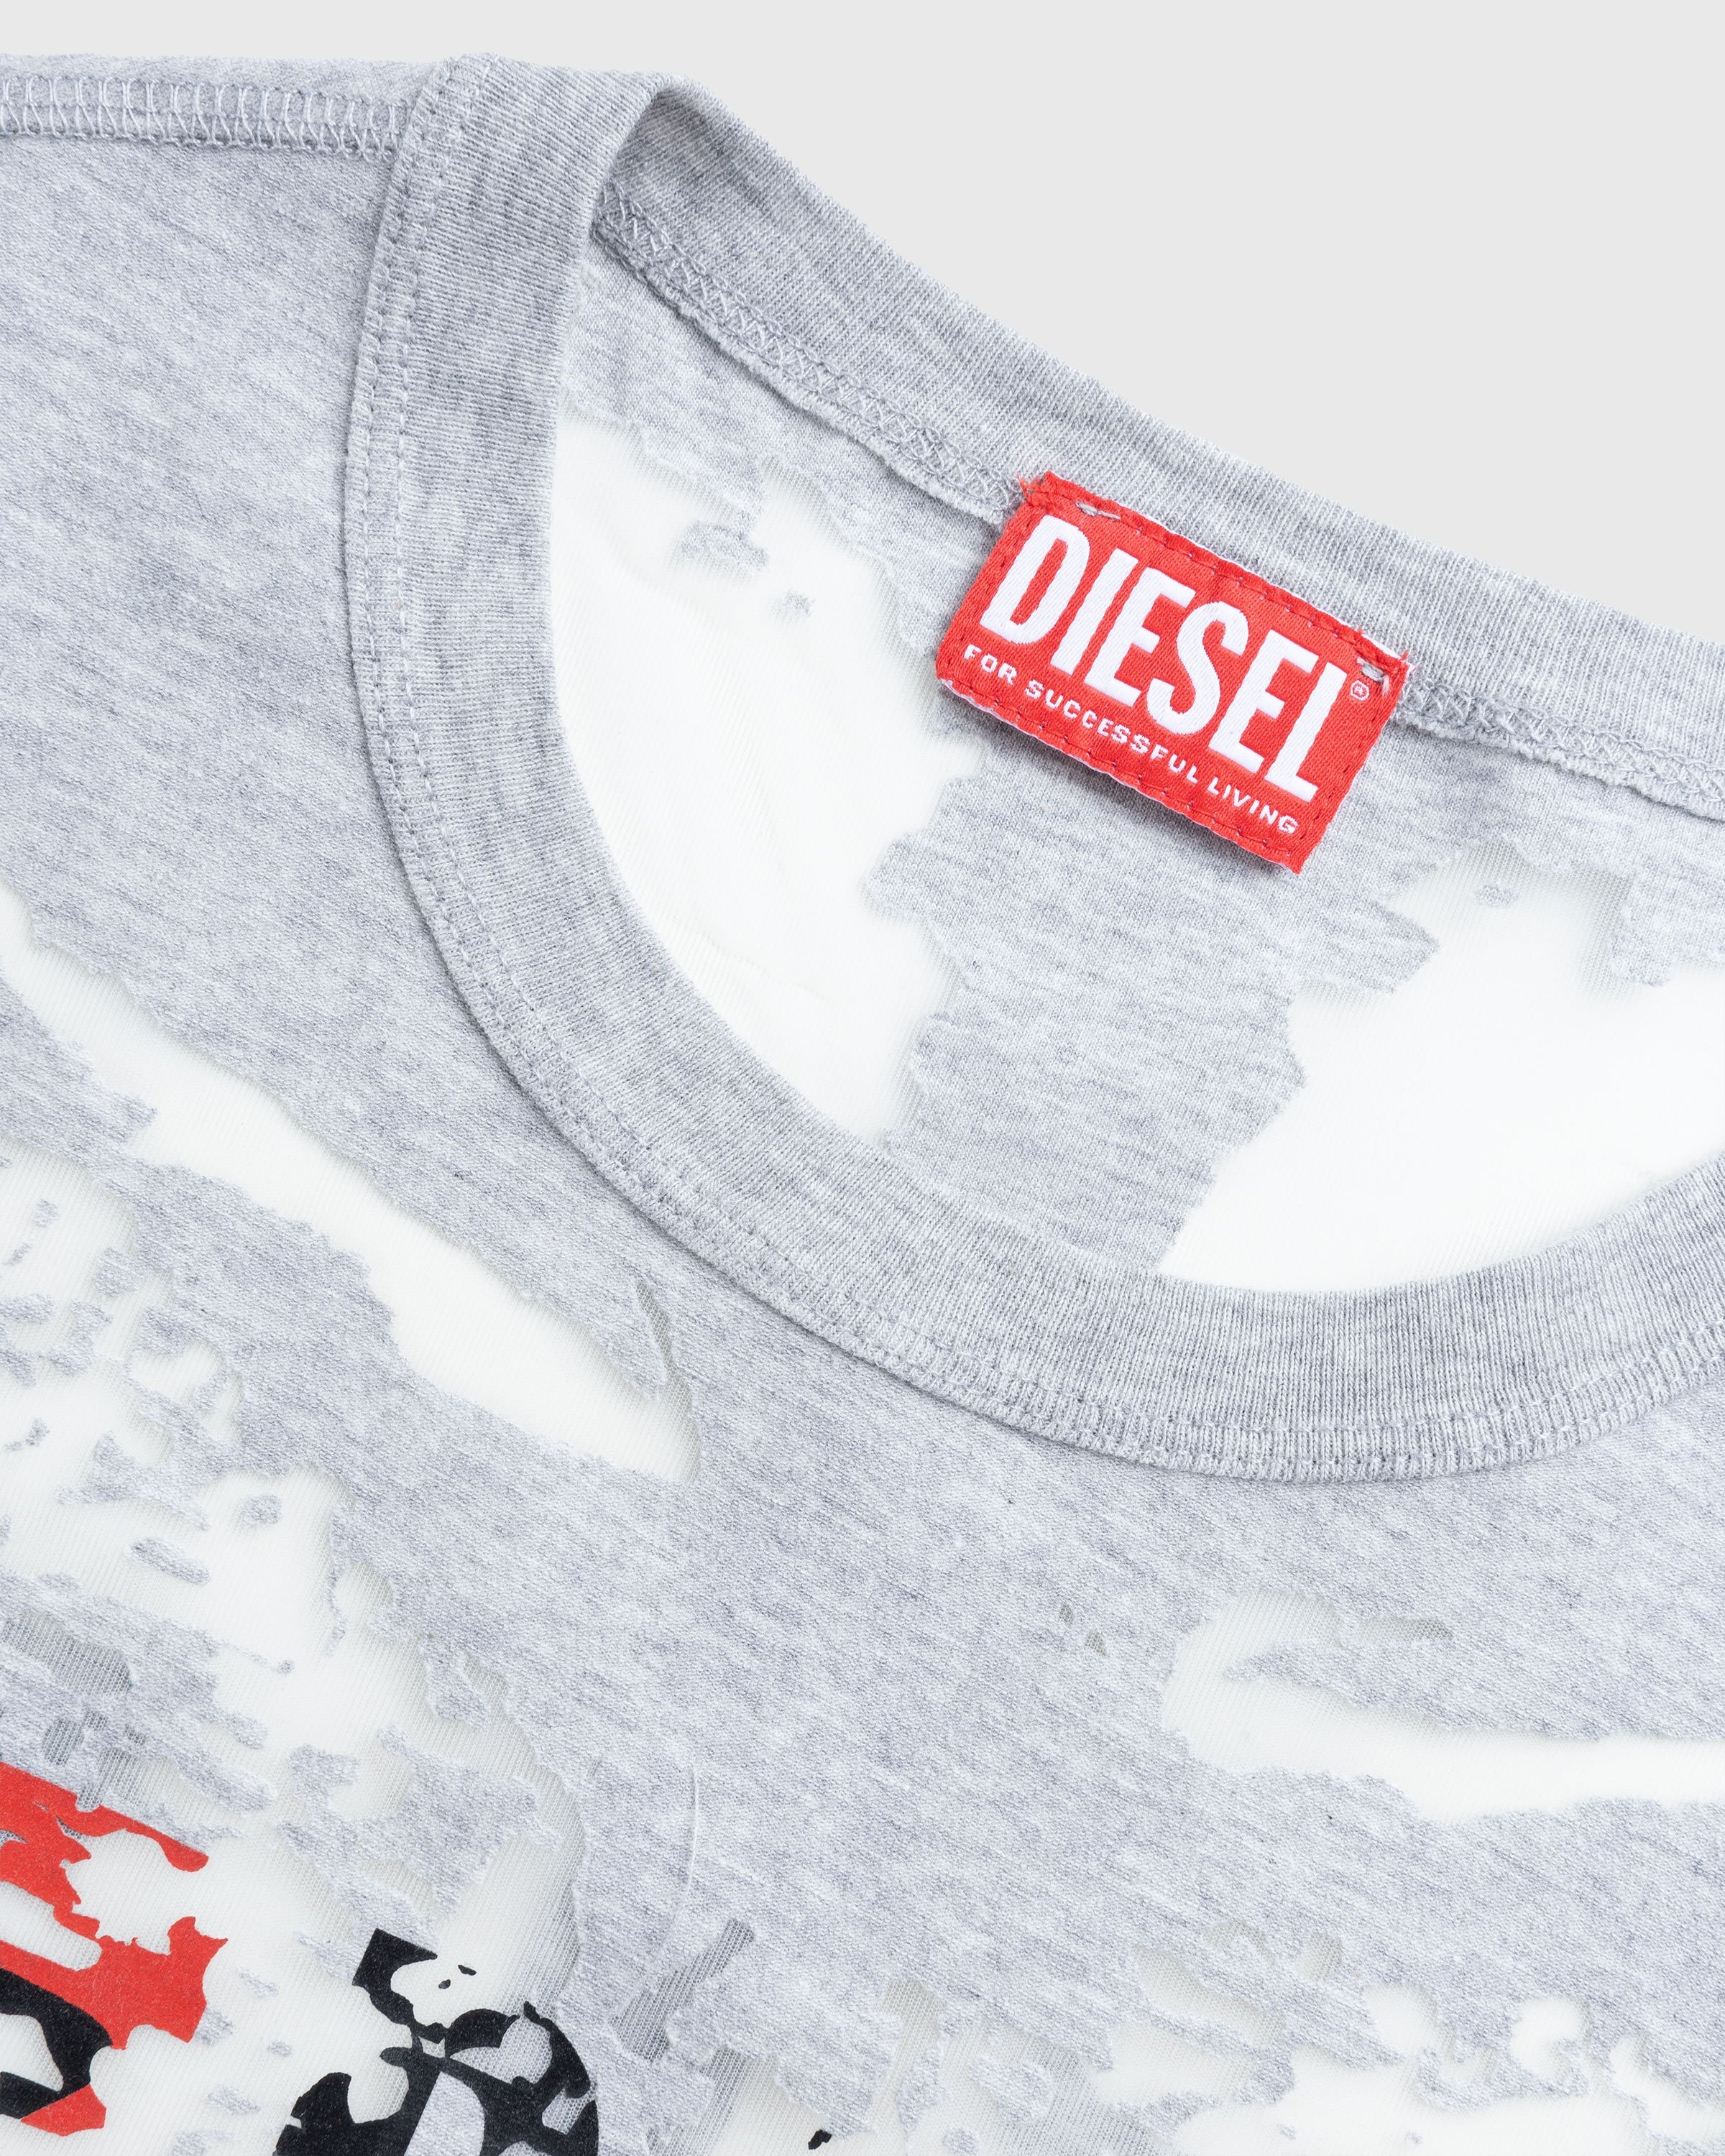 Diesel – T-Erme Burnout T-Shirt Grey - Tops - Multi - Image 6